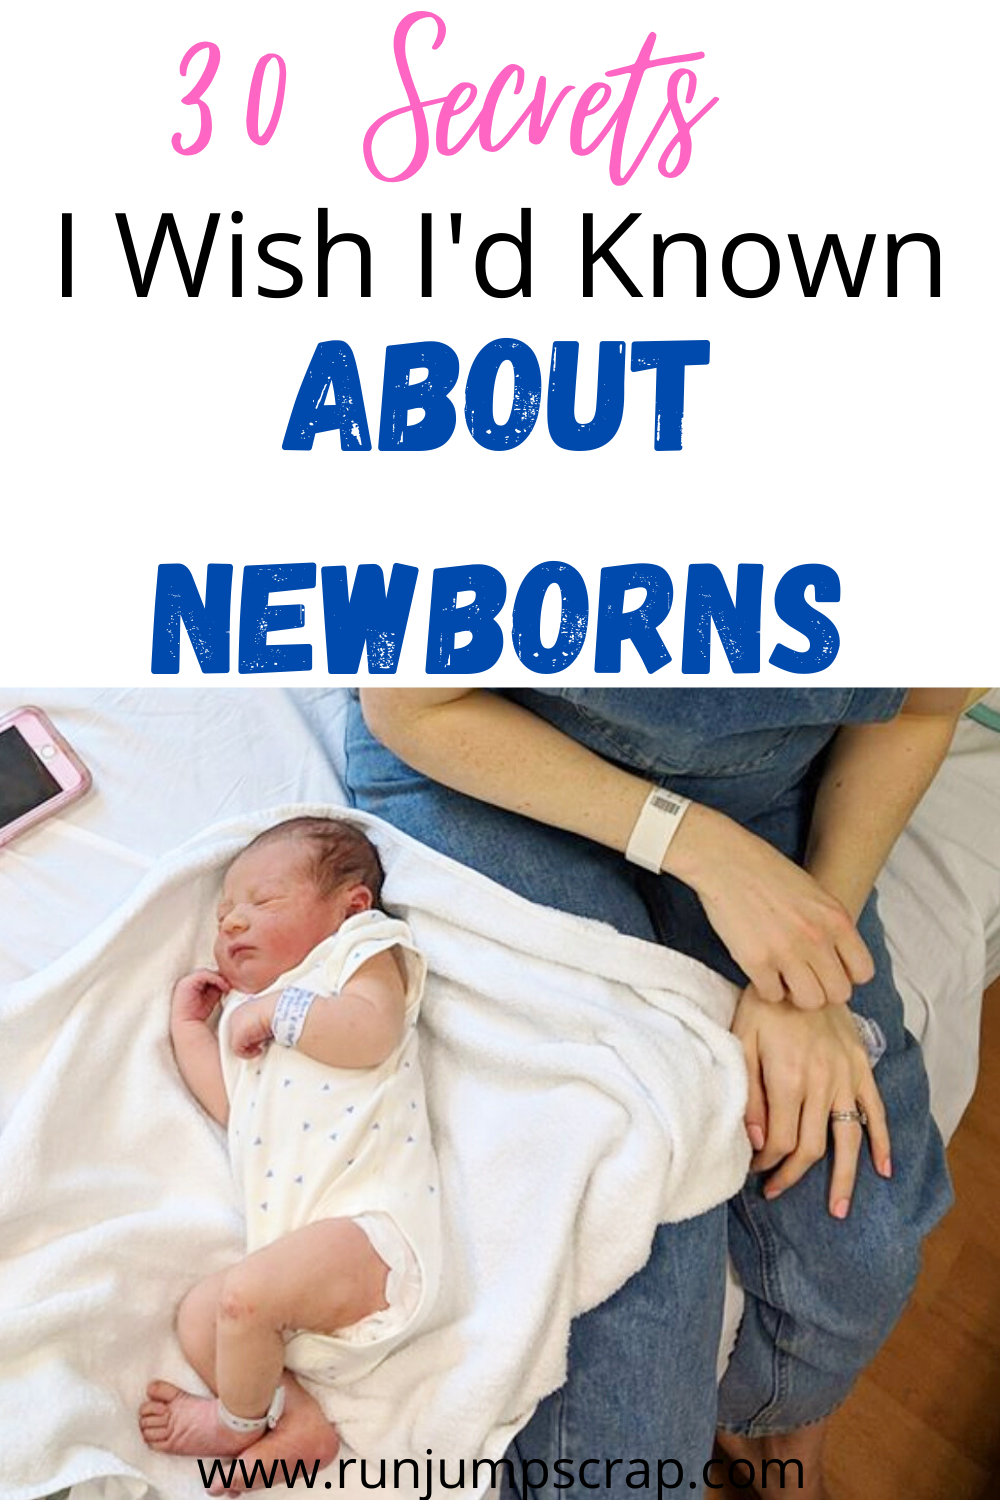 30 secrets about newborn babies